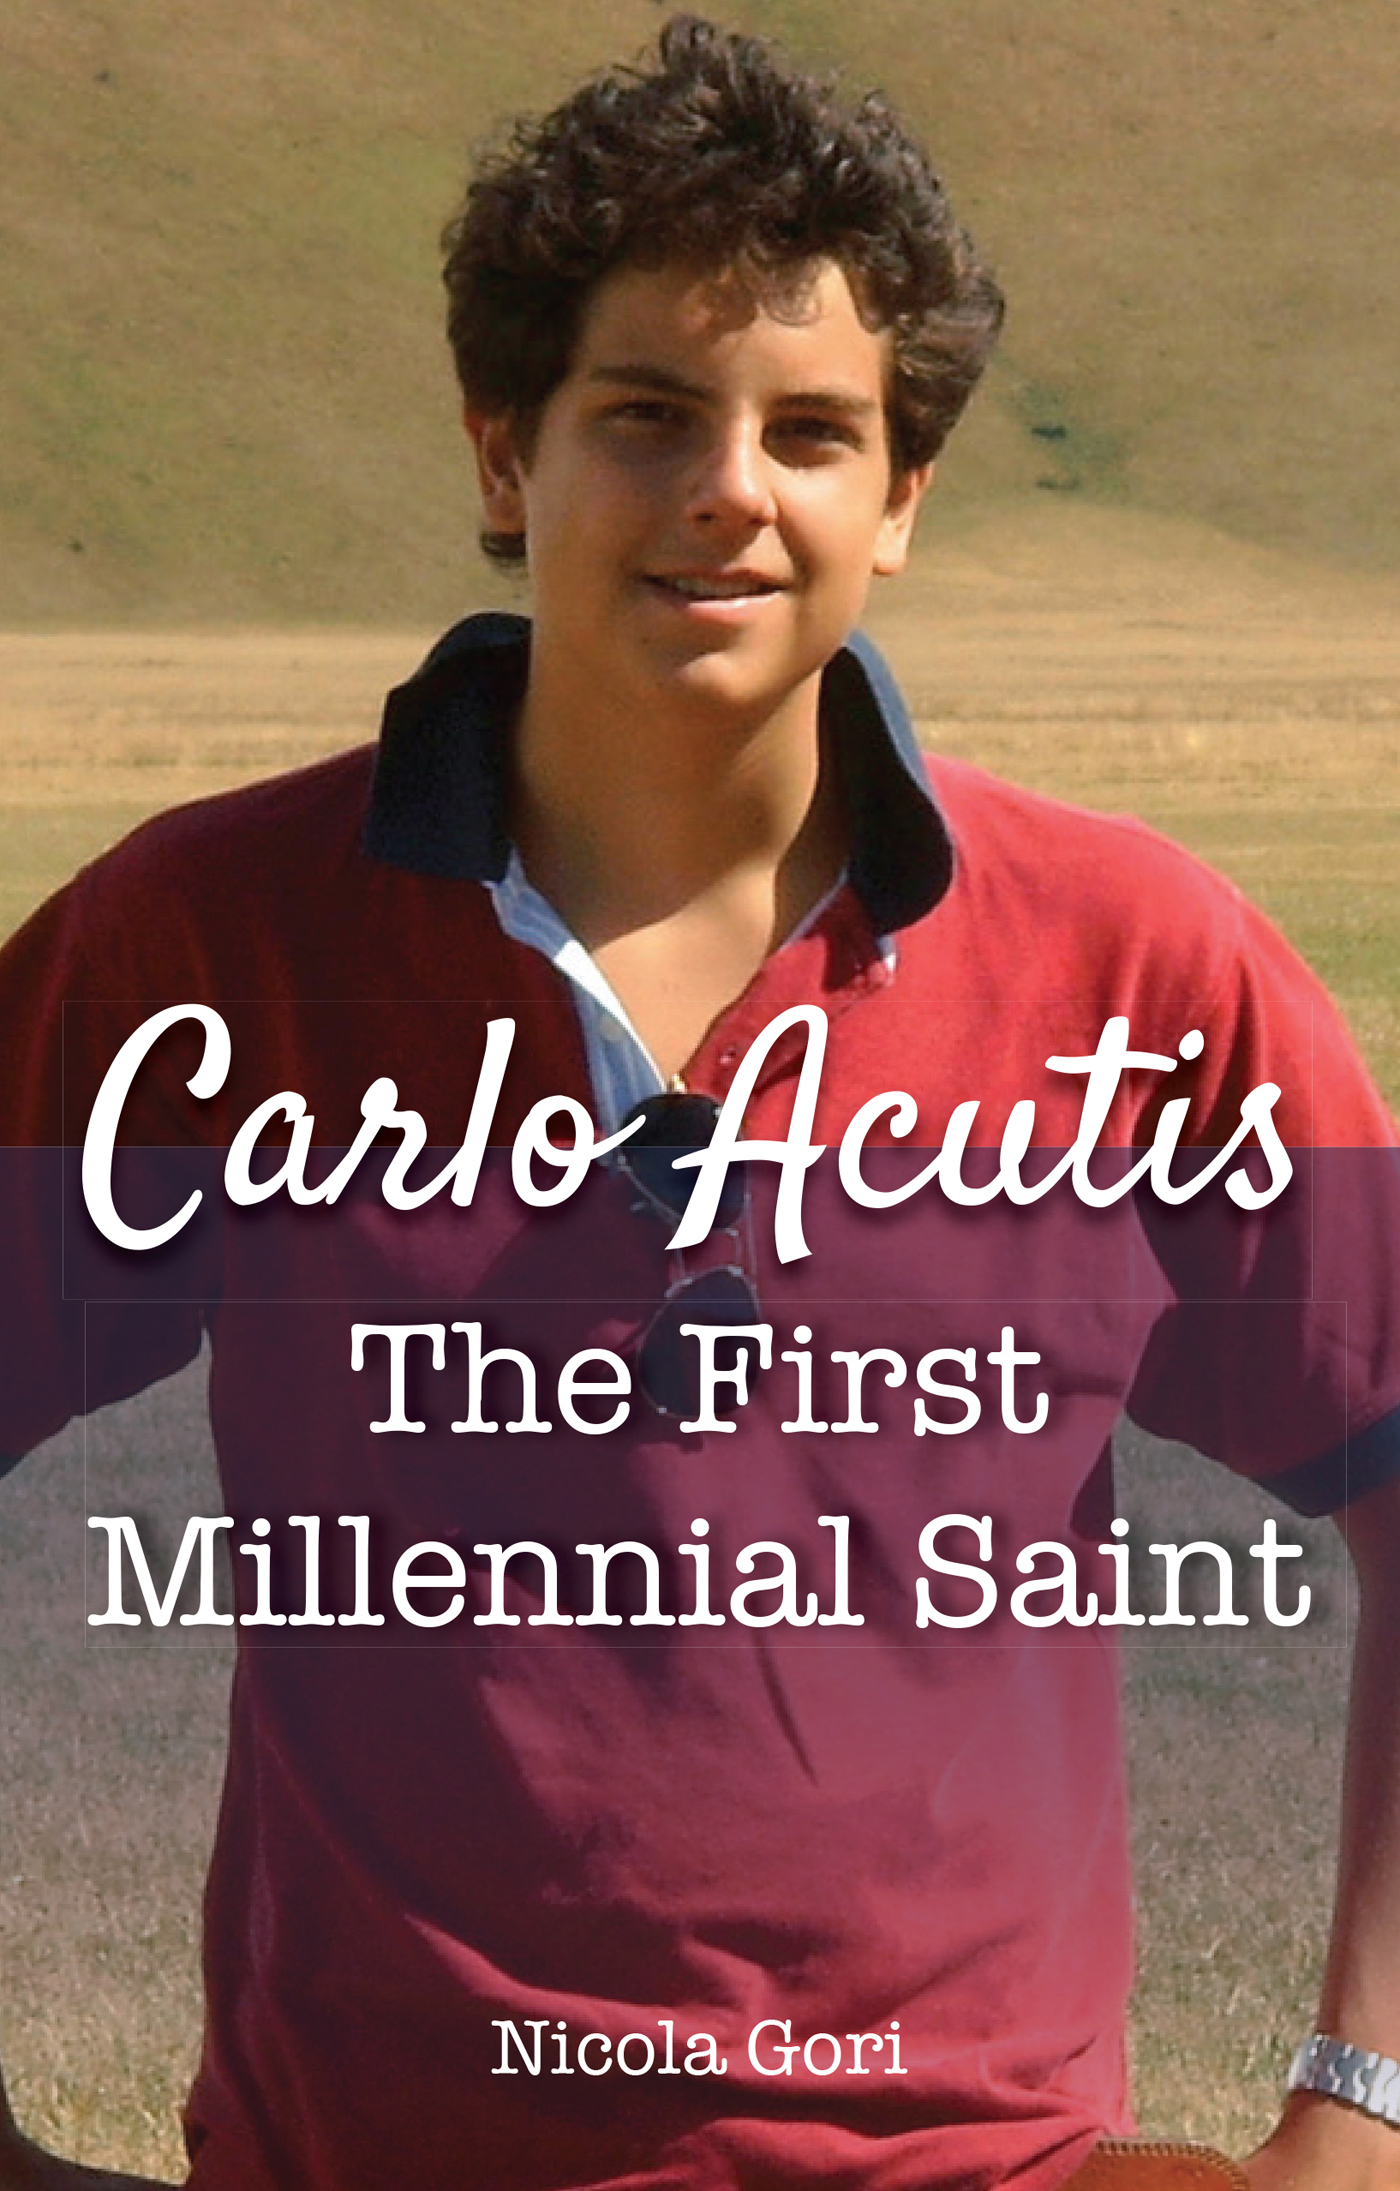 Carlo Acutis Carlo Acutis The First Millennial Saint Nicola Gori Translation - photo 1